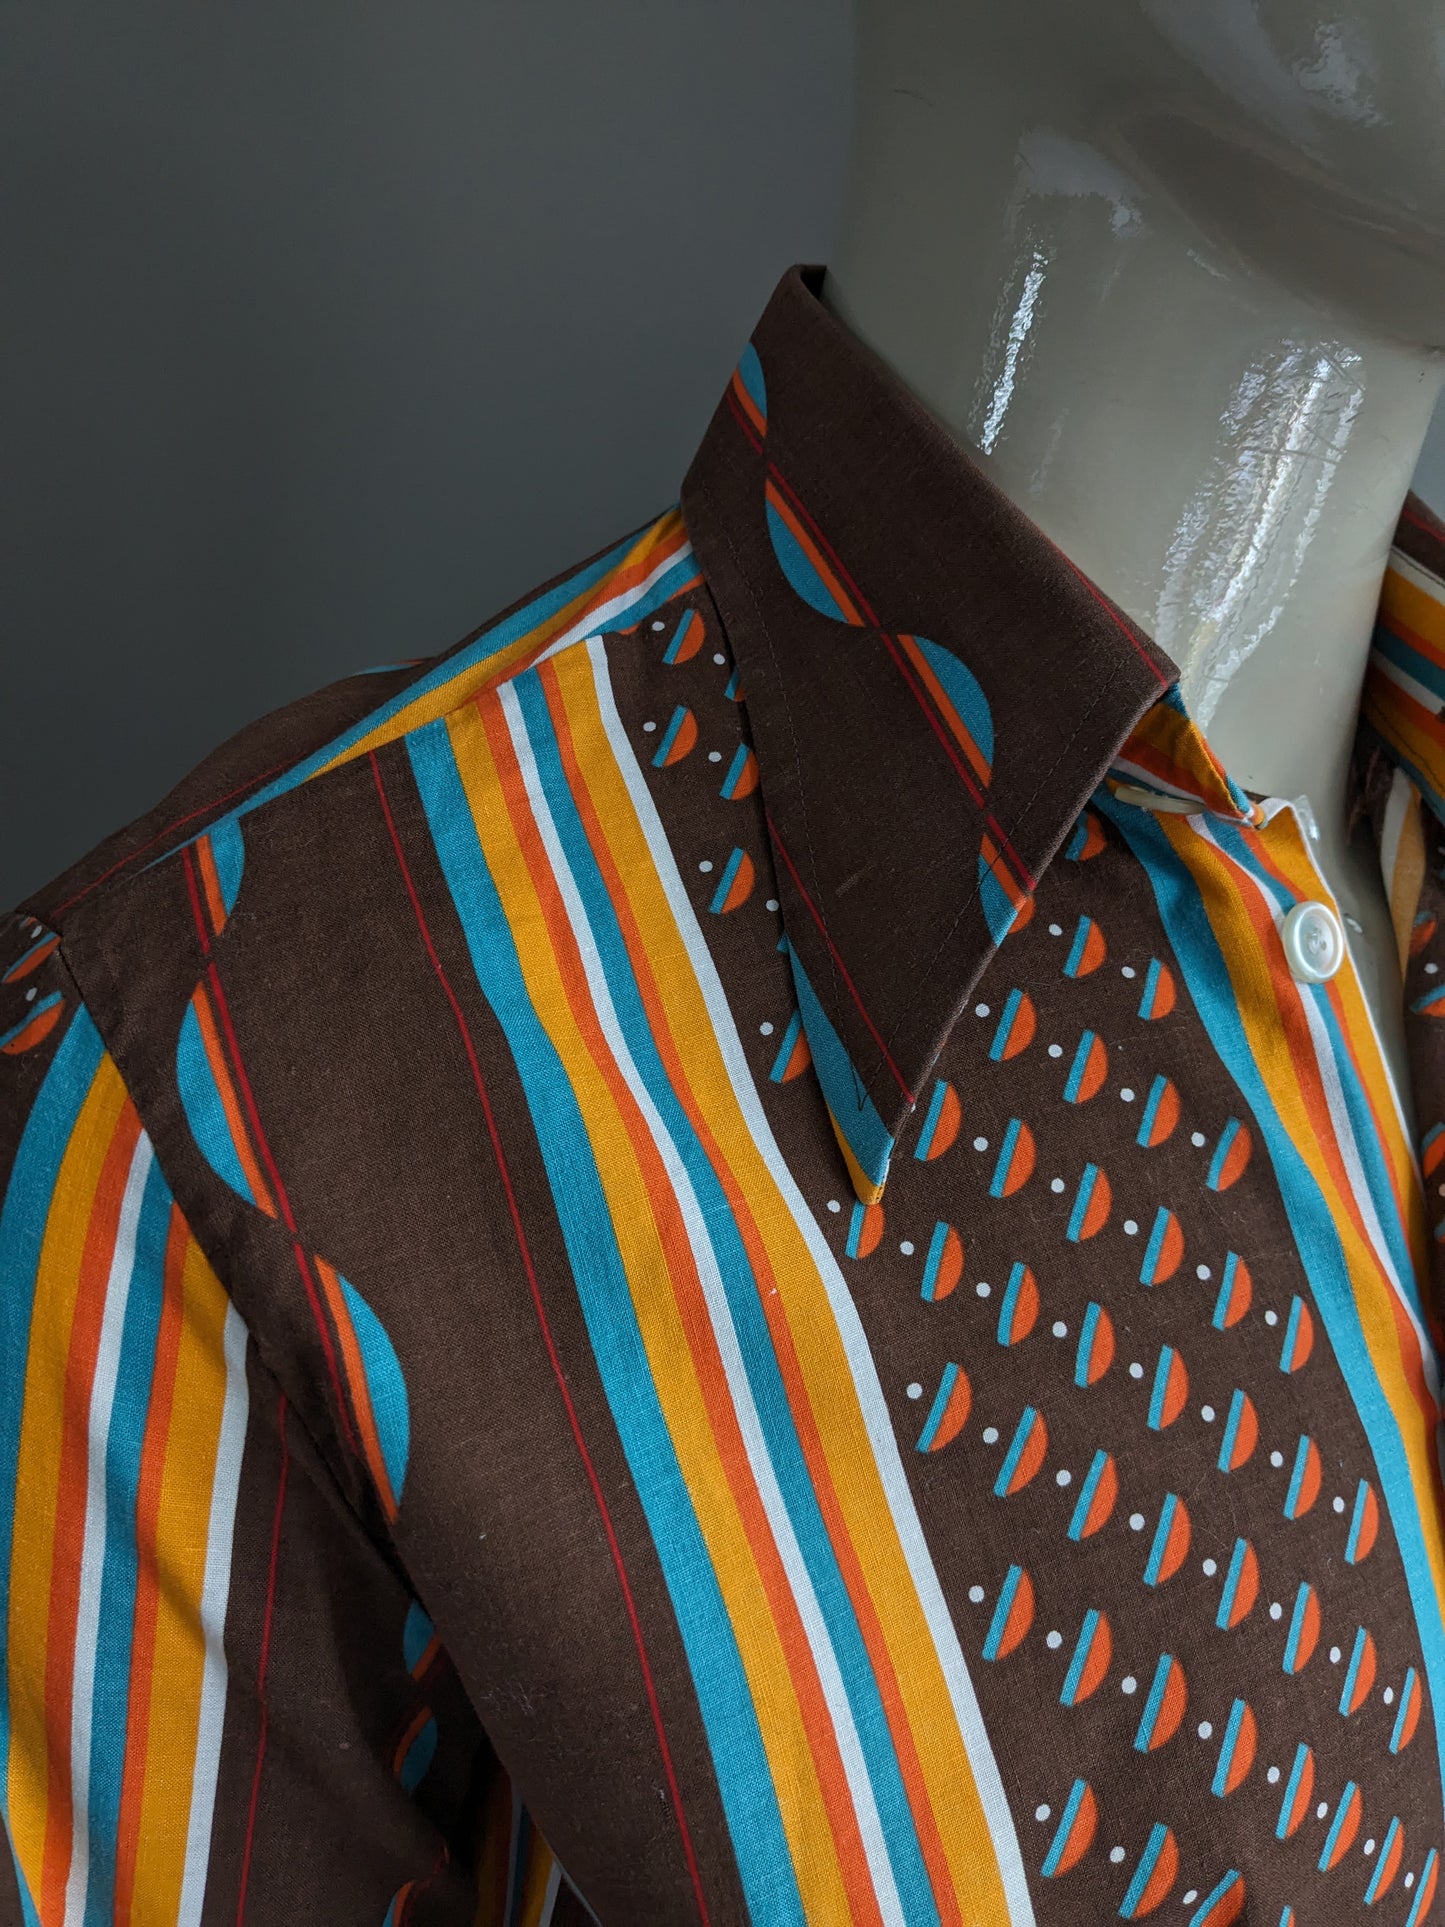 Vintage trend 70's shirt with point collar. Brown orange blue print. Size L.